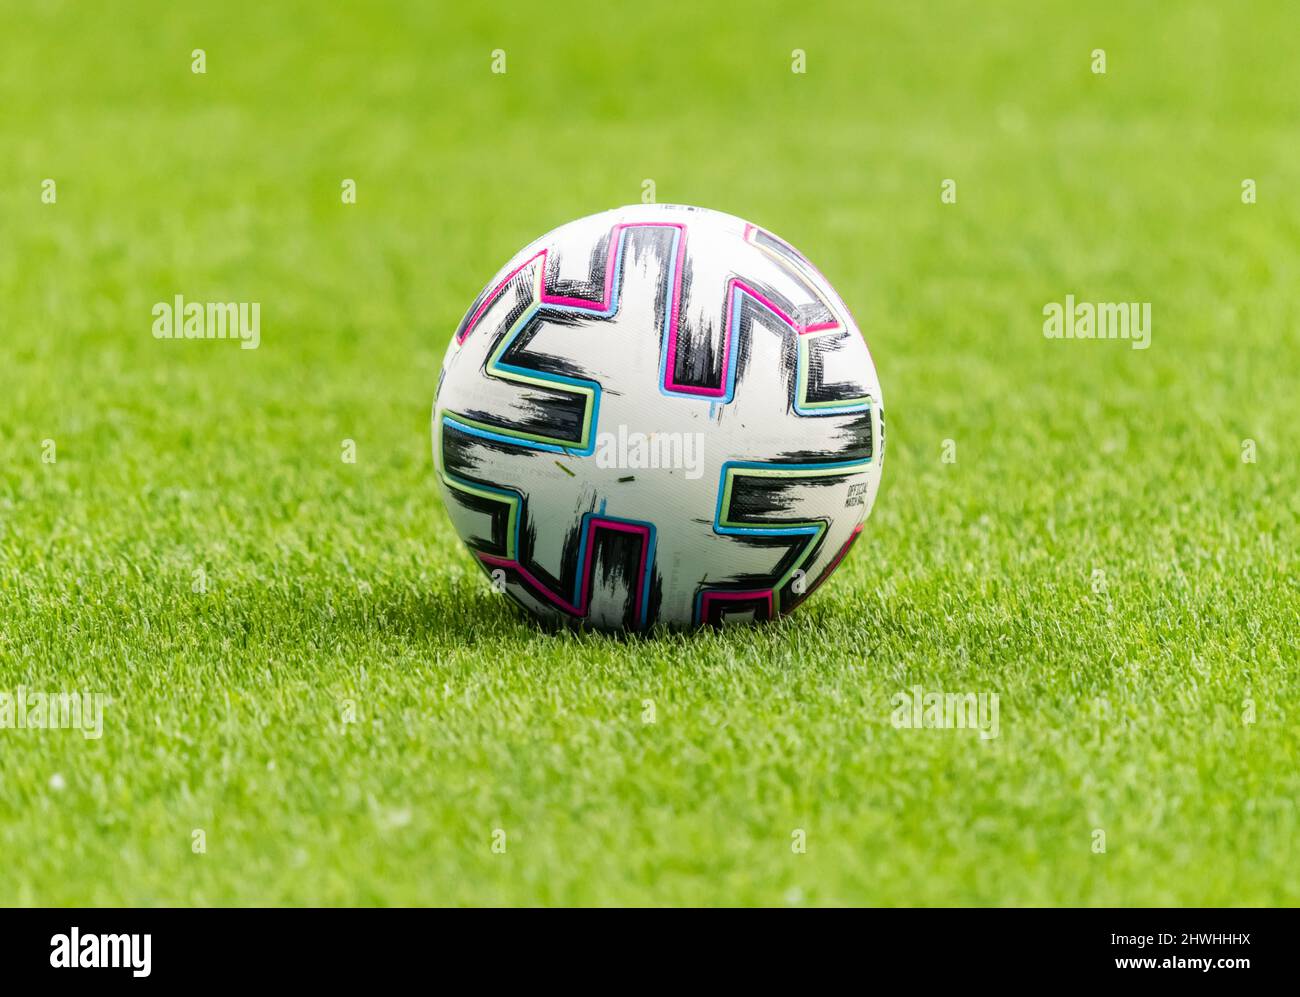 jouet anti-stress. ballon de football. illustration vectorielle